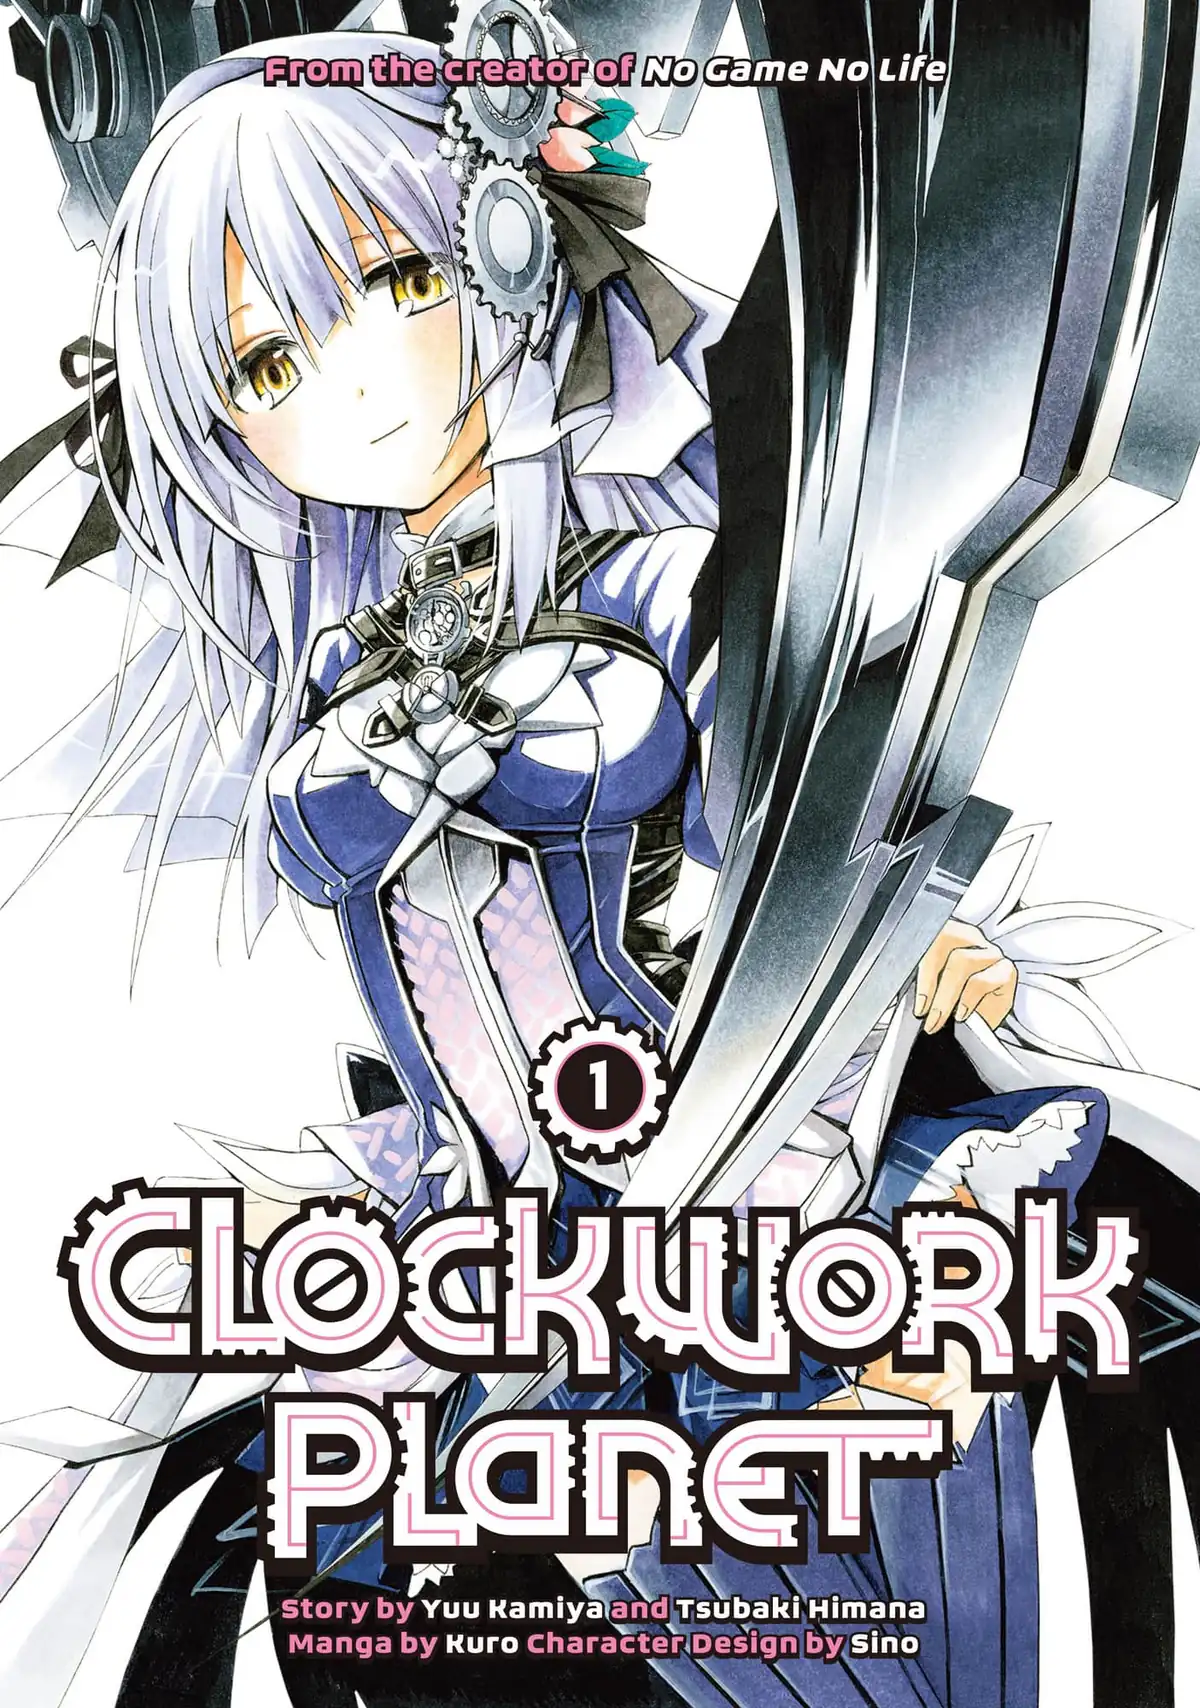 Clockwork Planet RyuZu Statue - Entertainment Earth